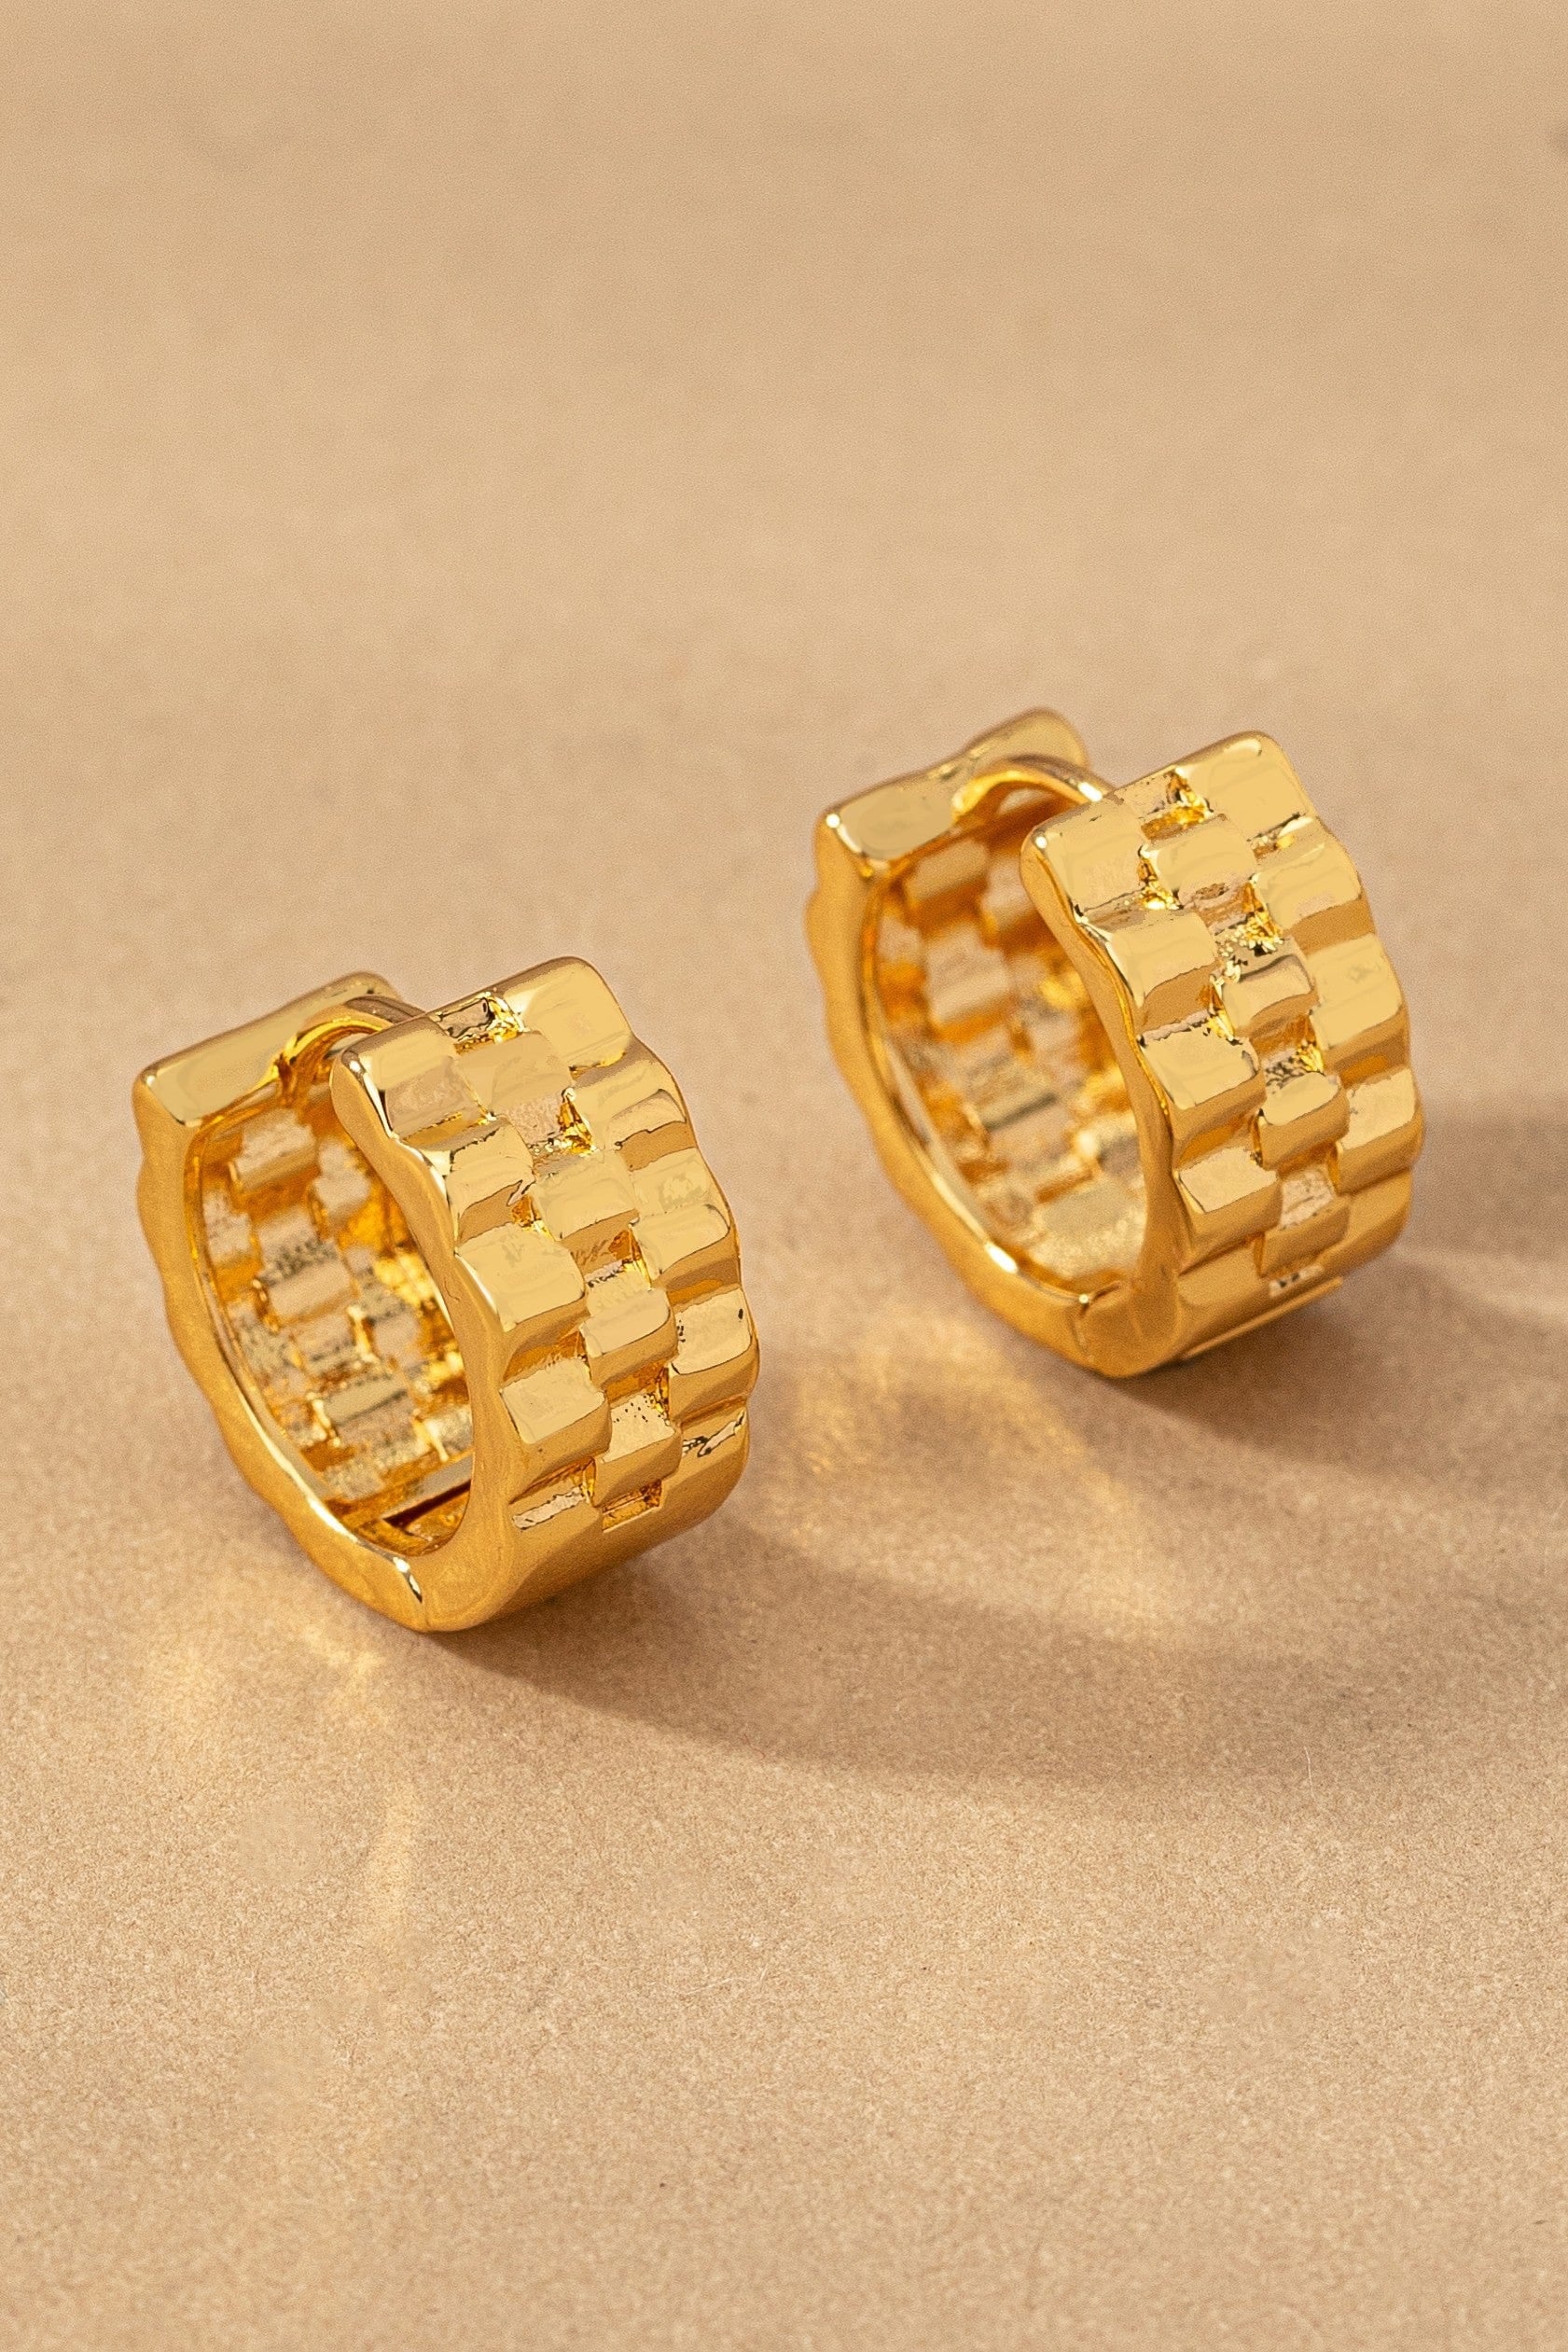 LA3accessories Jewelry - Earrings Water Proof Stainless Watch Band Huggie Earrings In Gold 06512374